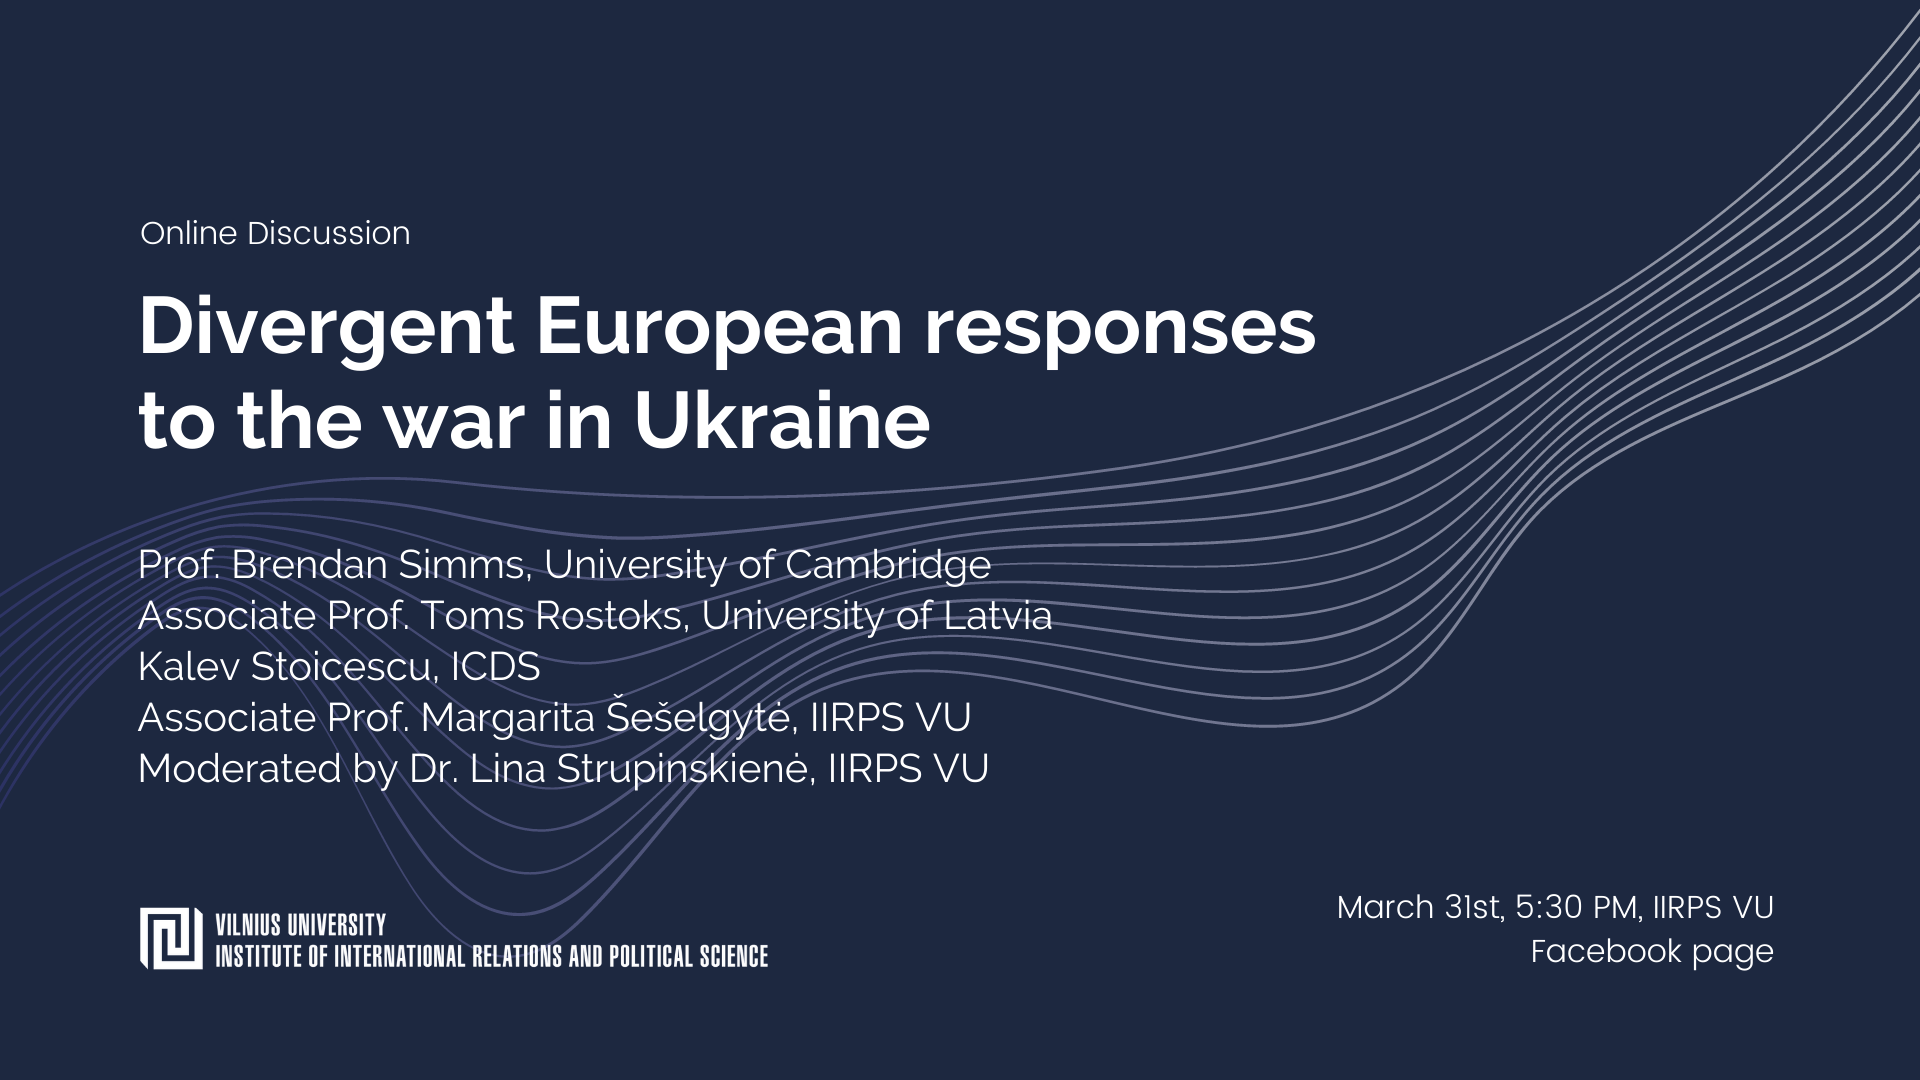 Online discussion “Divergent European responses to the war in Ukraine”